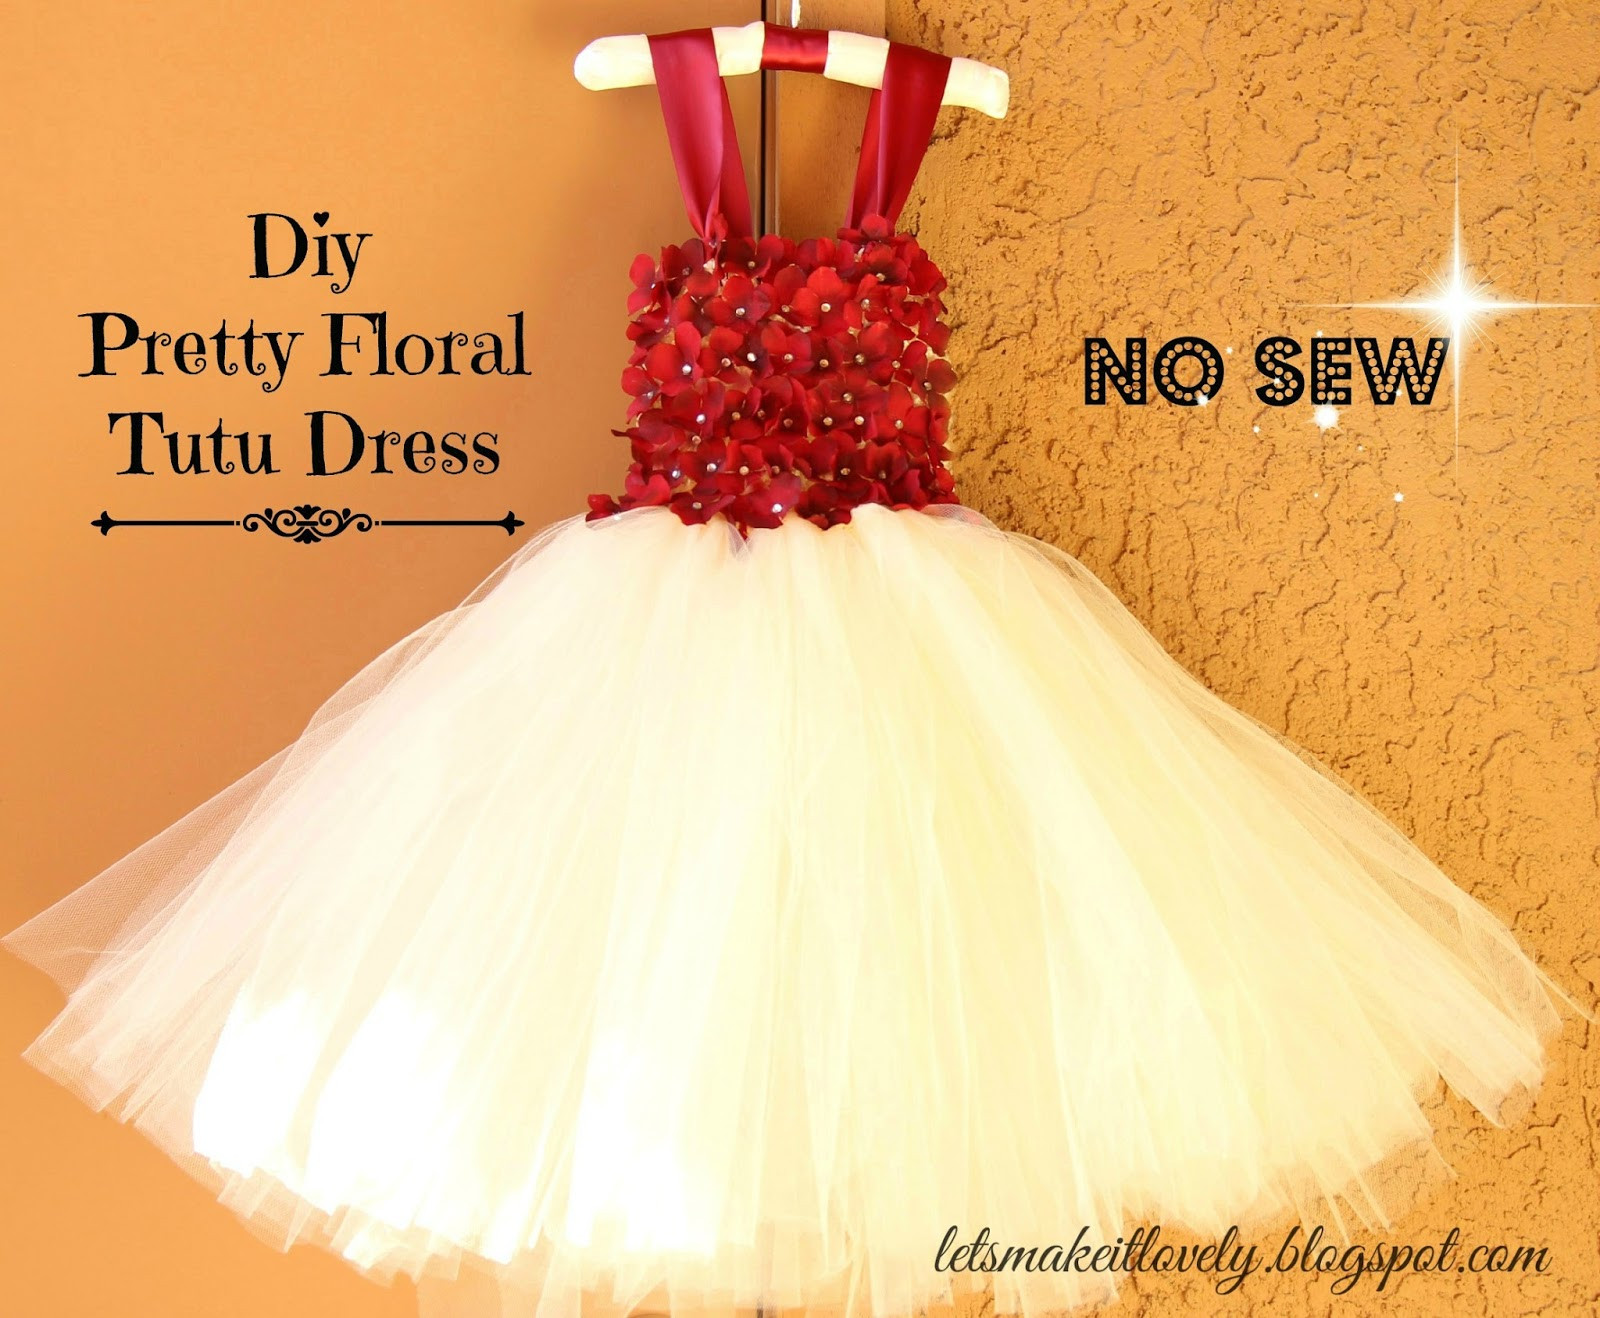 DIY Toddler Tutu
 Let s make it lovely DIY Flower girl dress or Tutu dress